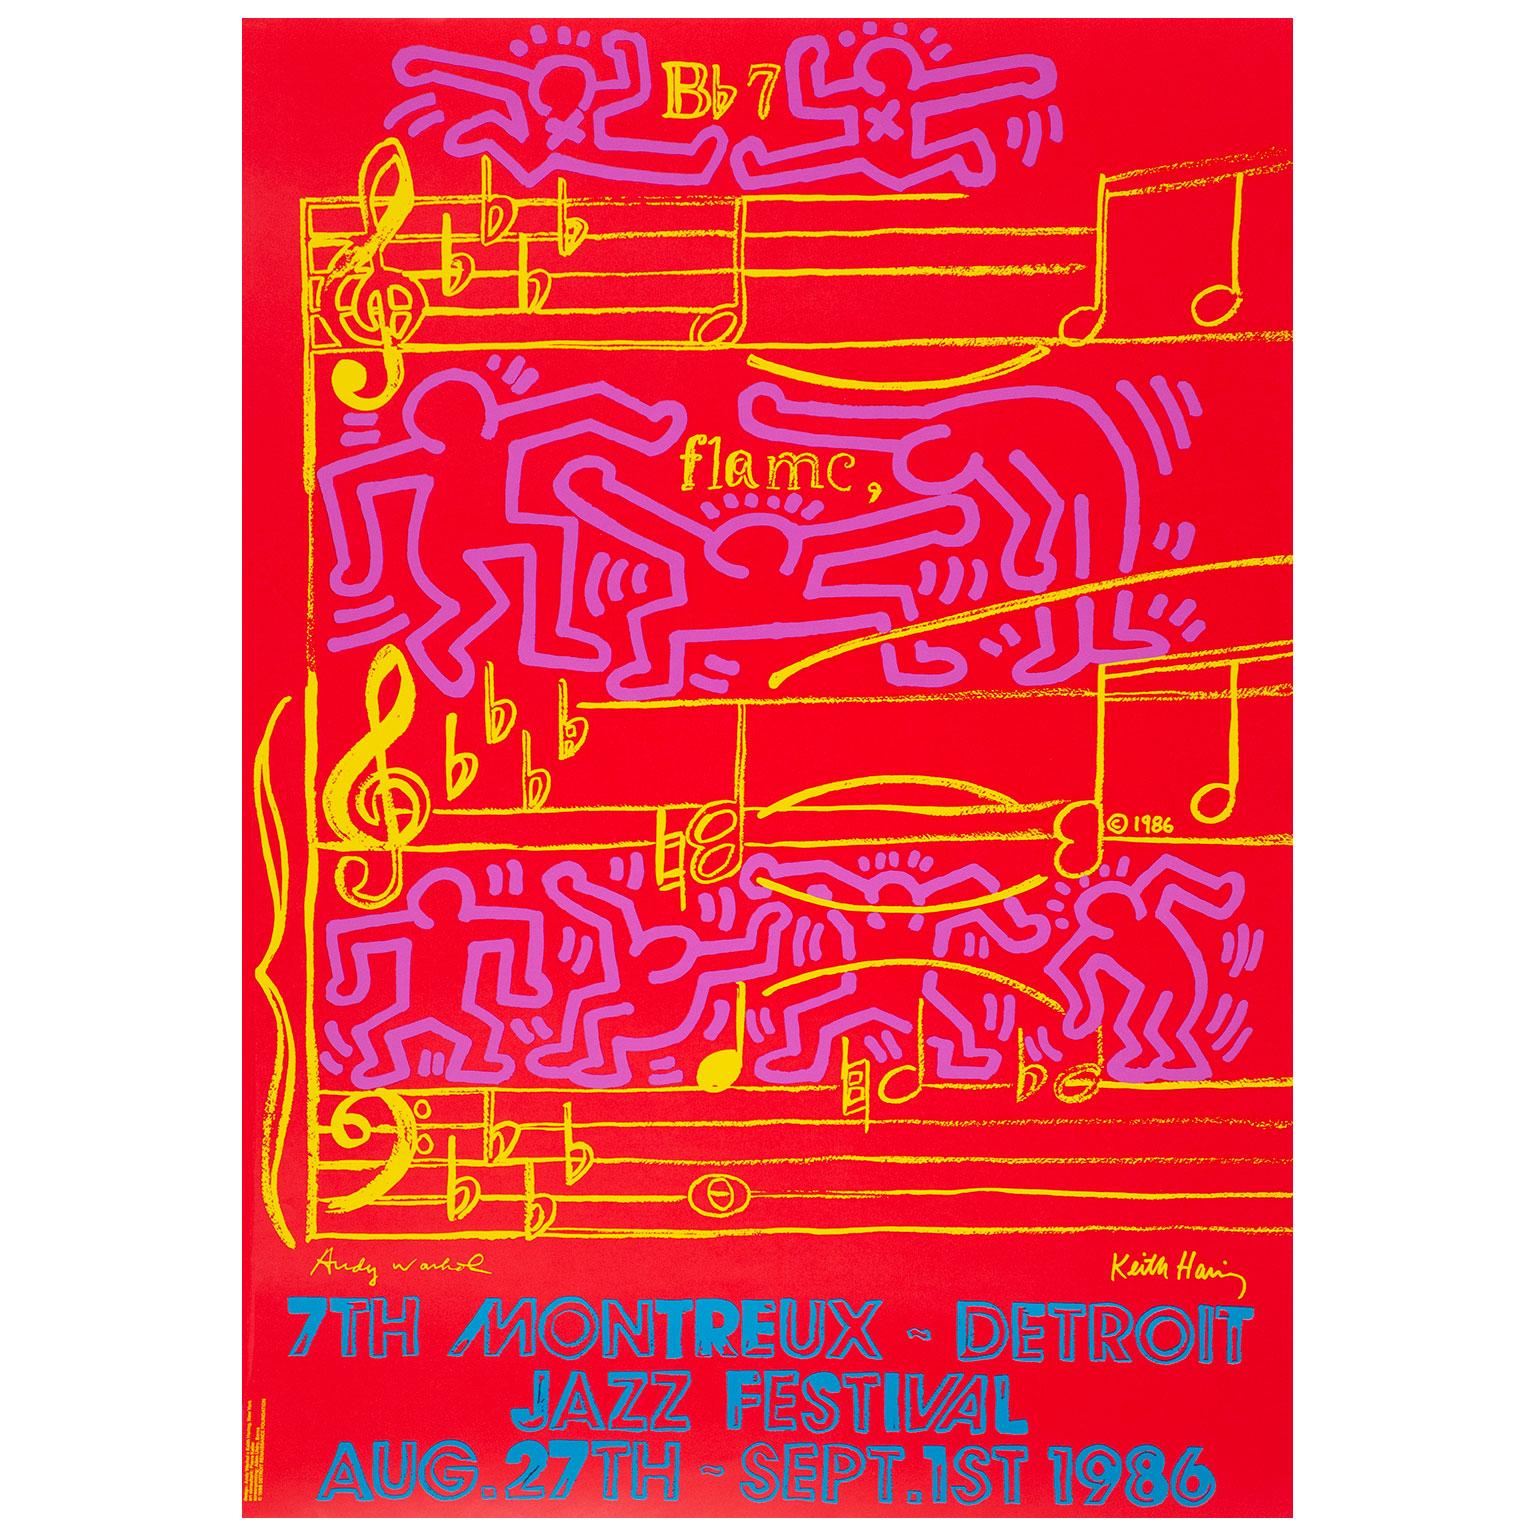 Montreux-Detroit Jazz Festival 1986 - Print by Andy Warhol